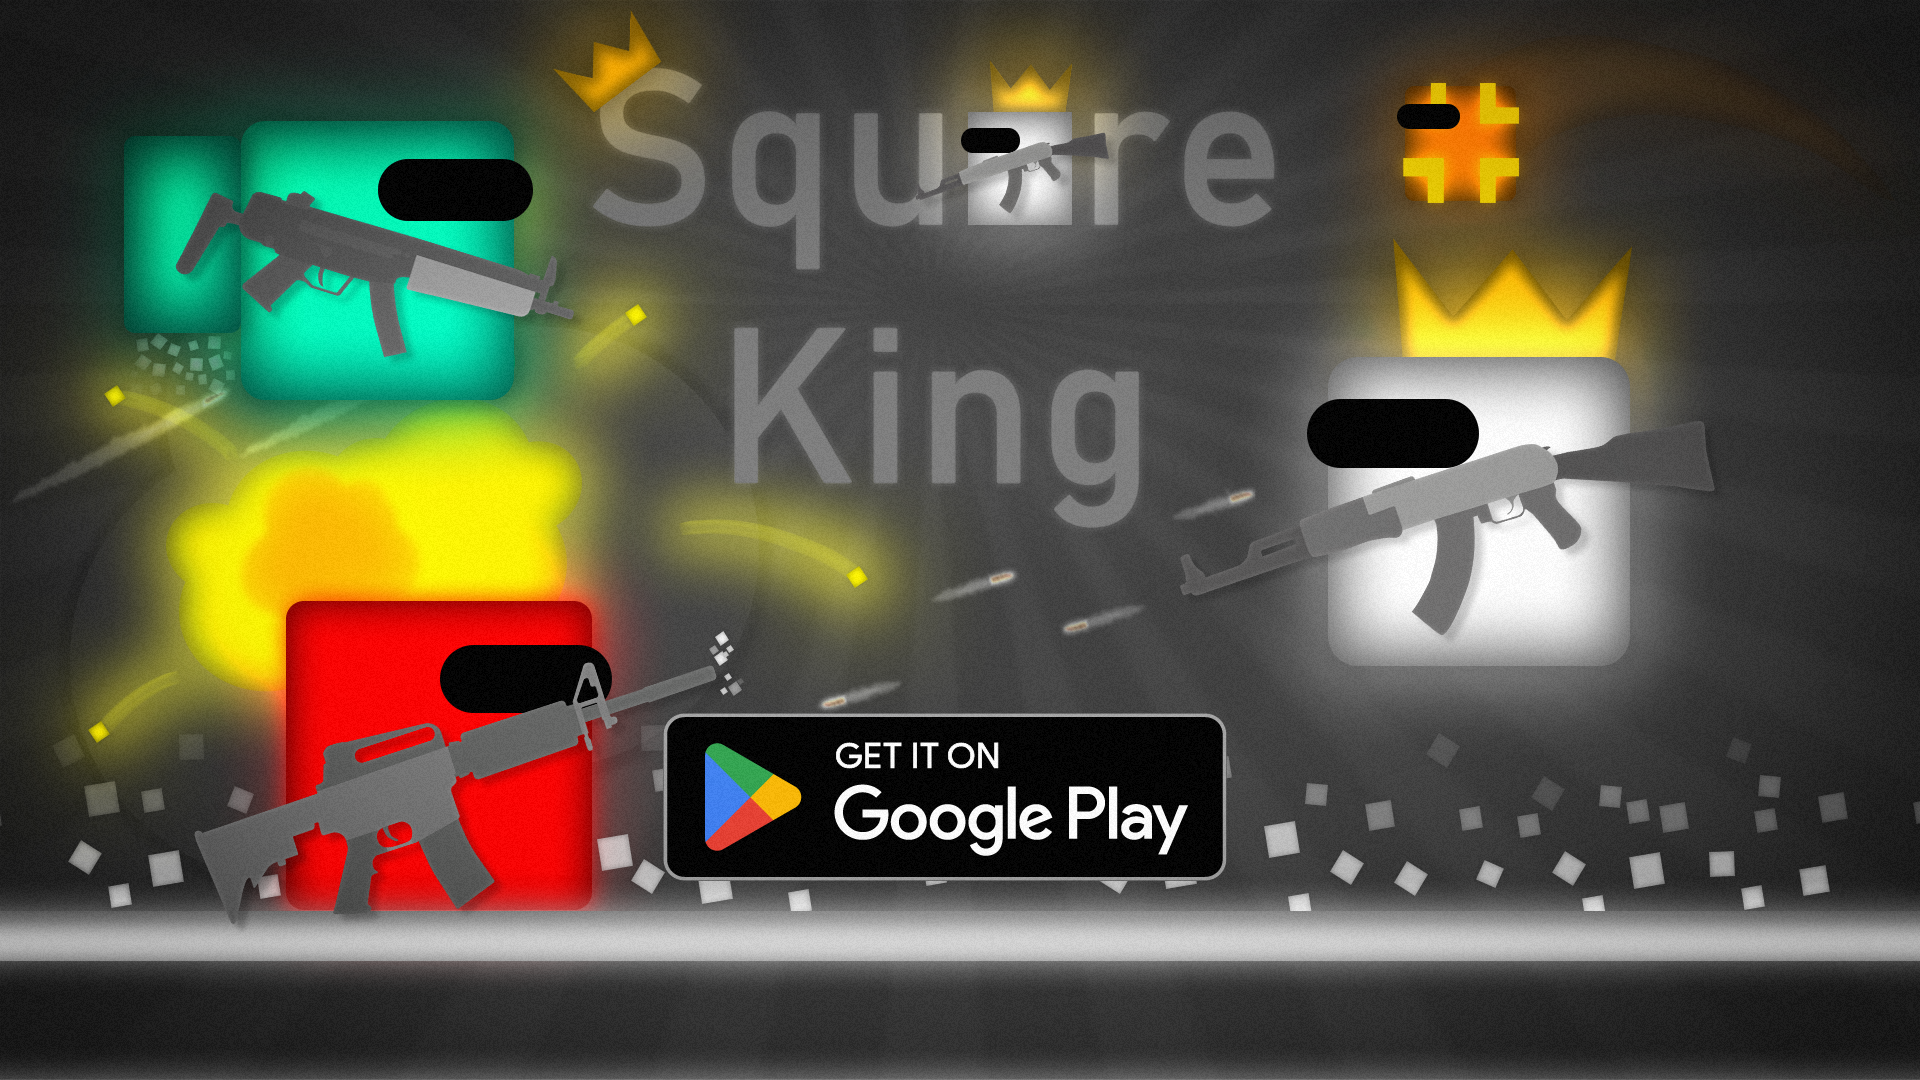 Square King